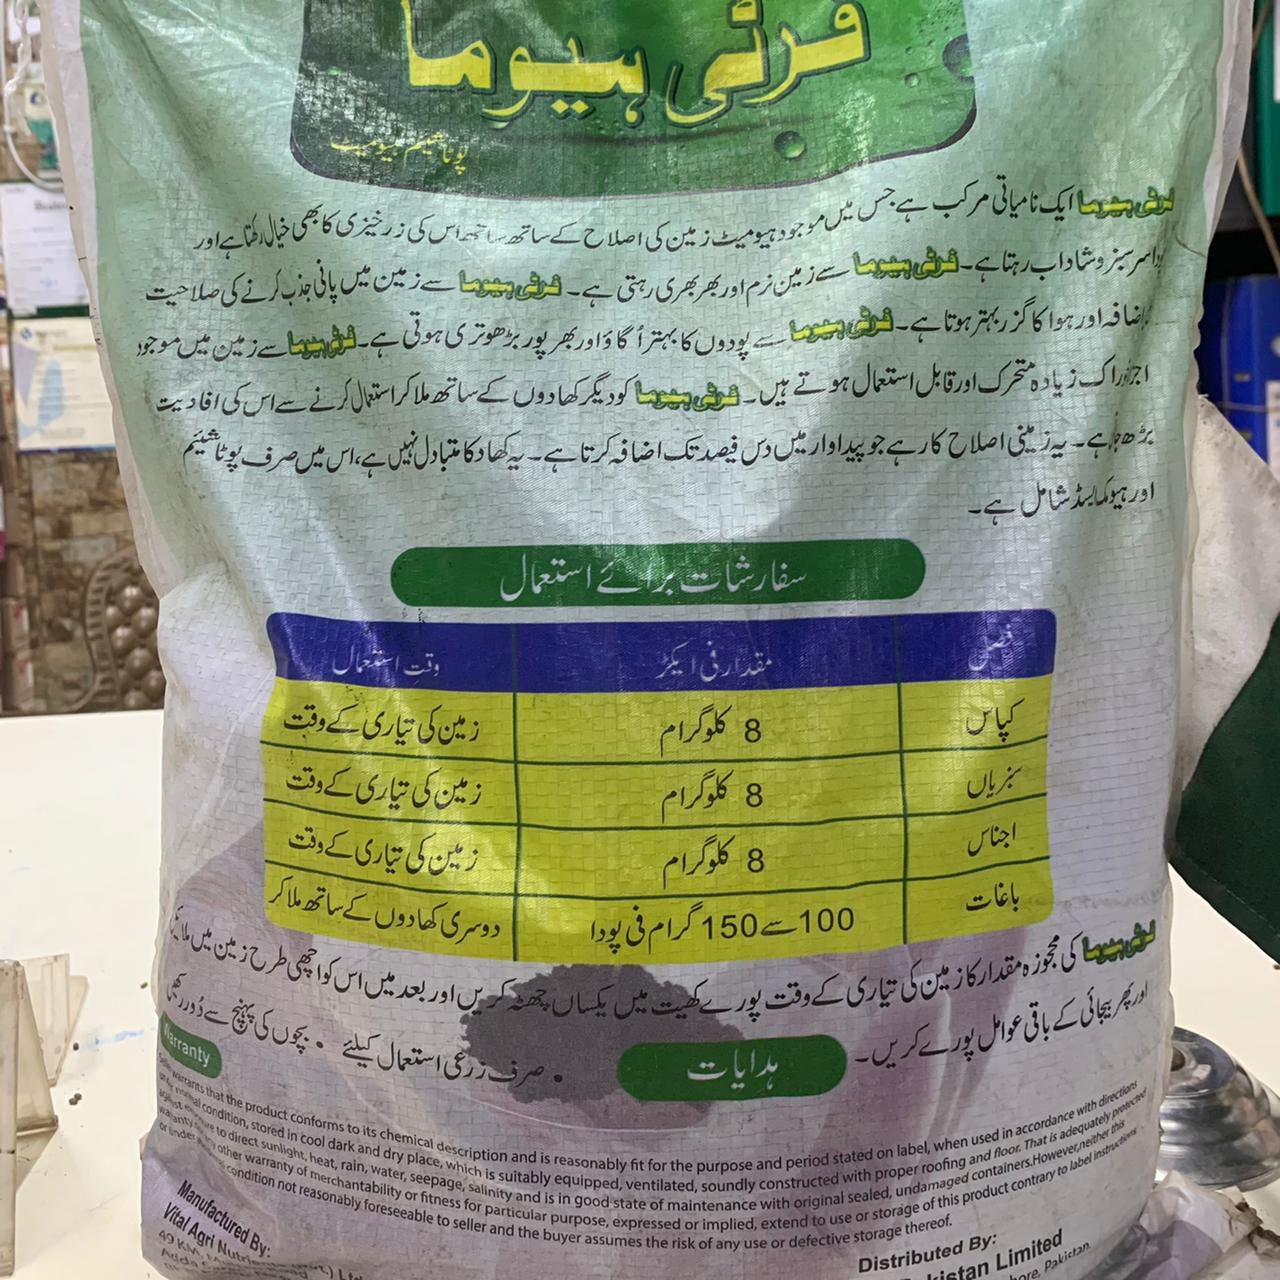 2nd Ferti Huma Humic Acid 40 + Potash (k2o) 7 8kg Ici Ici Pakistan Lci Lucky Core Industries ہیومک ایسڈ